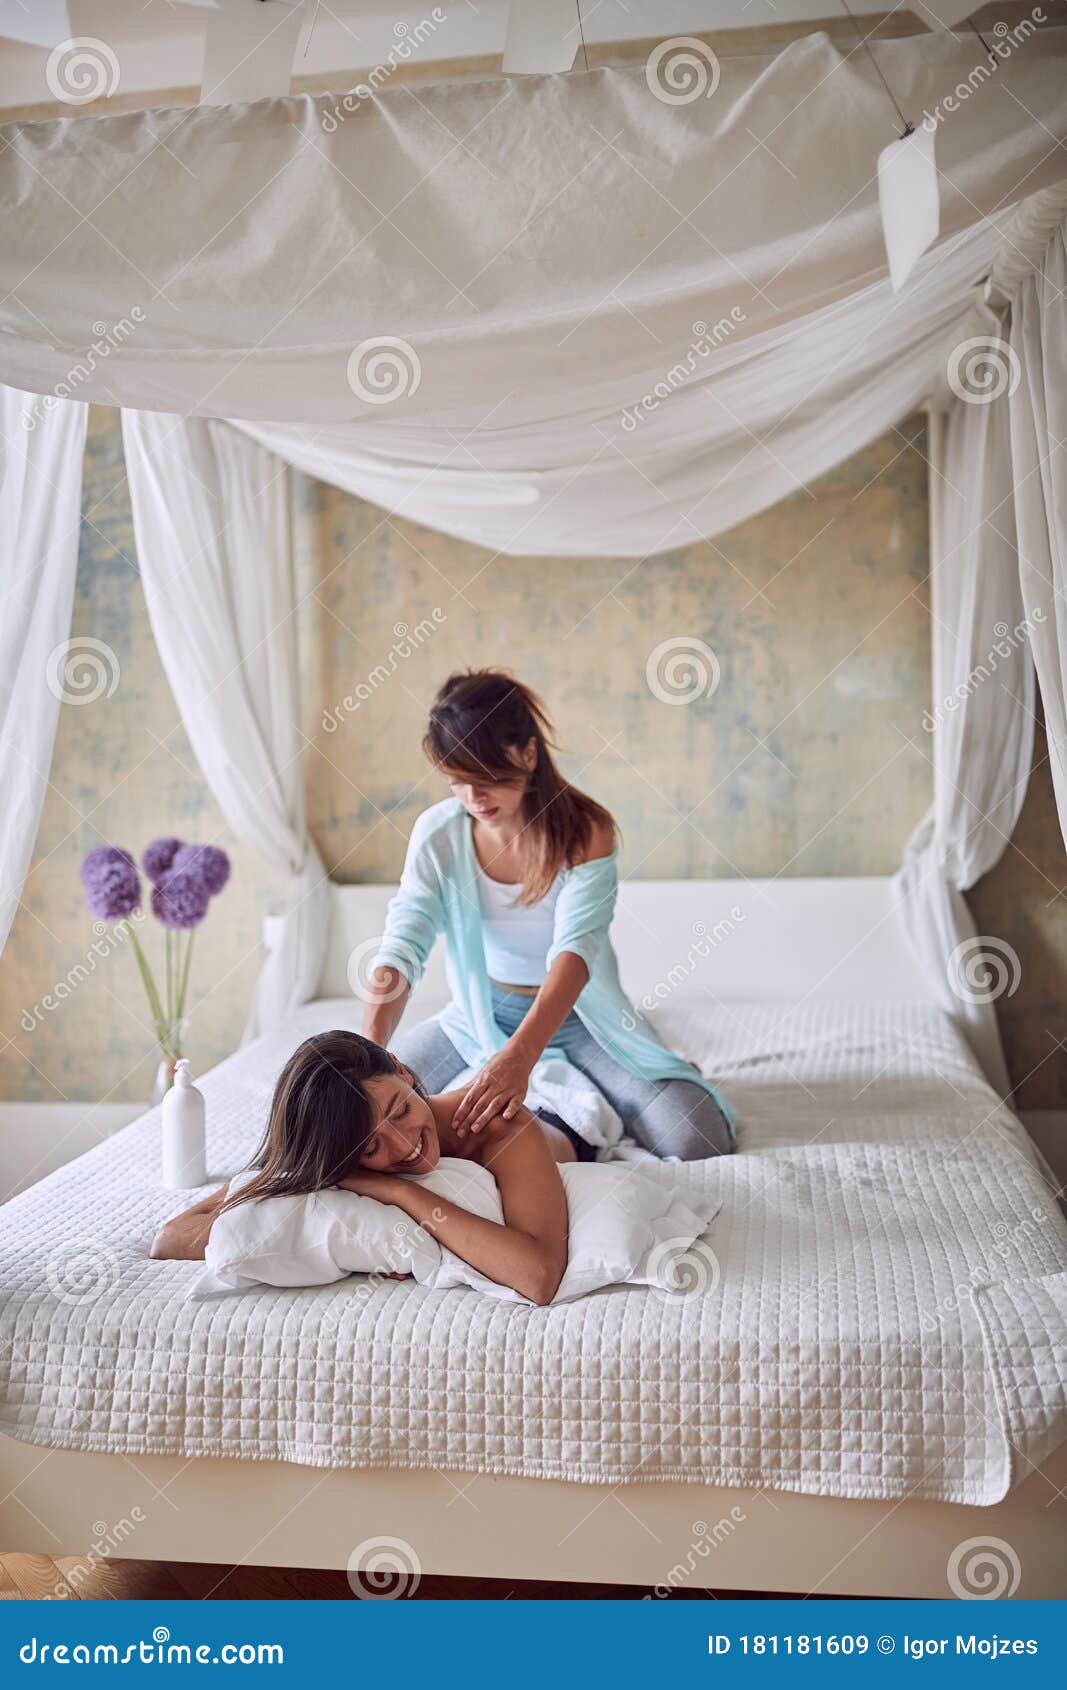 amanda houle recommends lesbian massage room pic